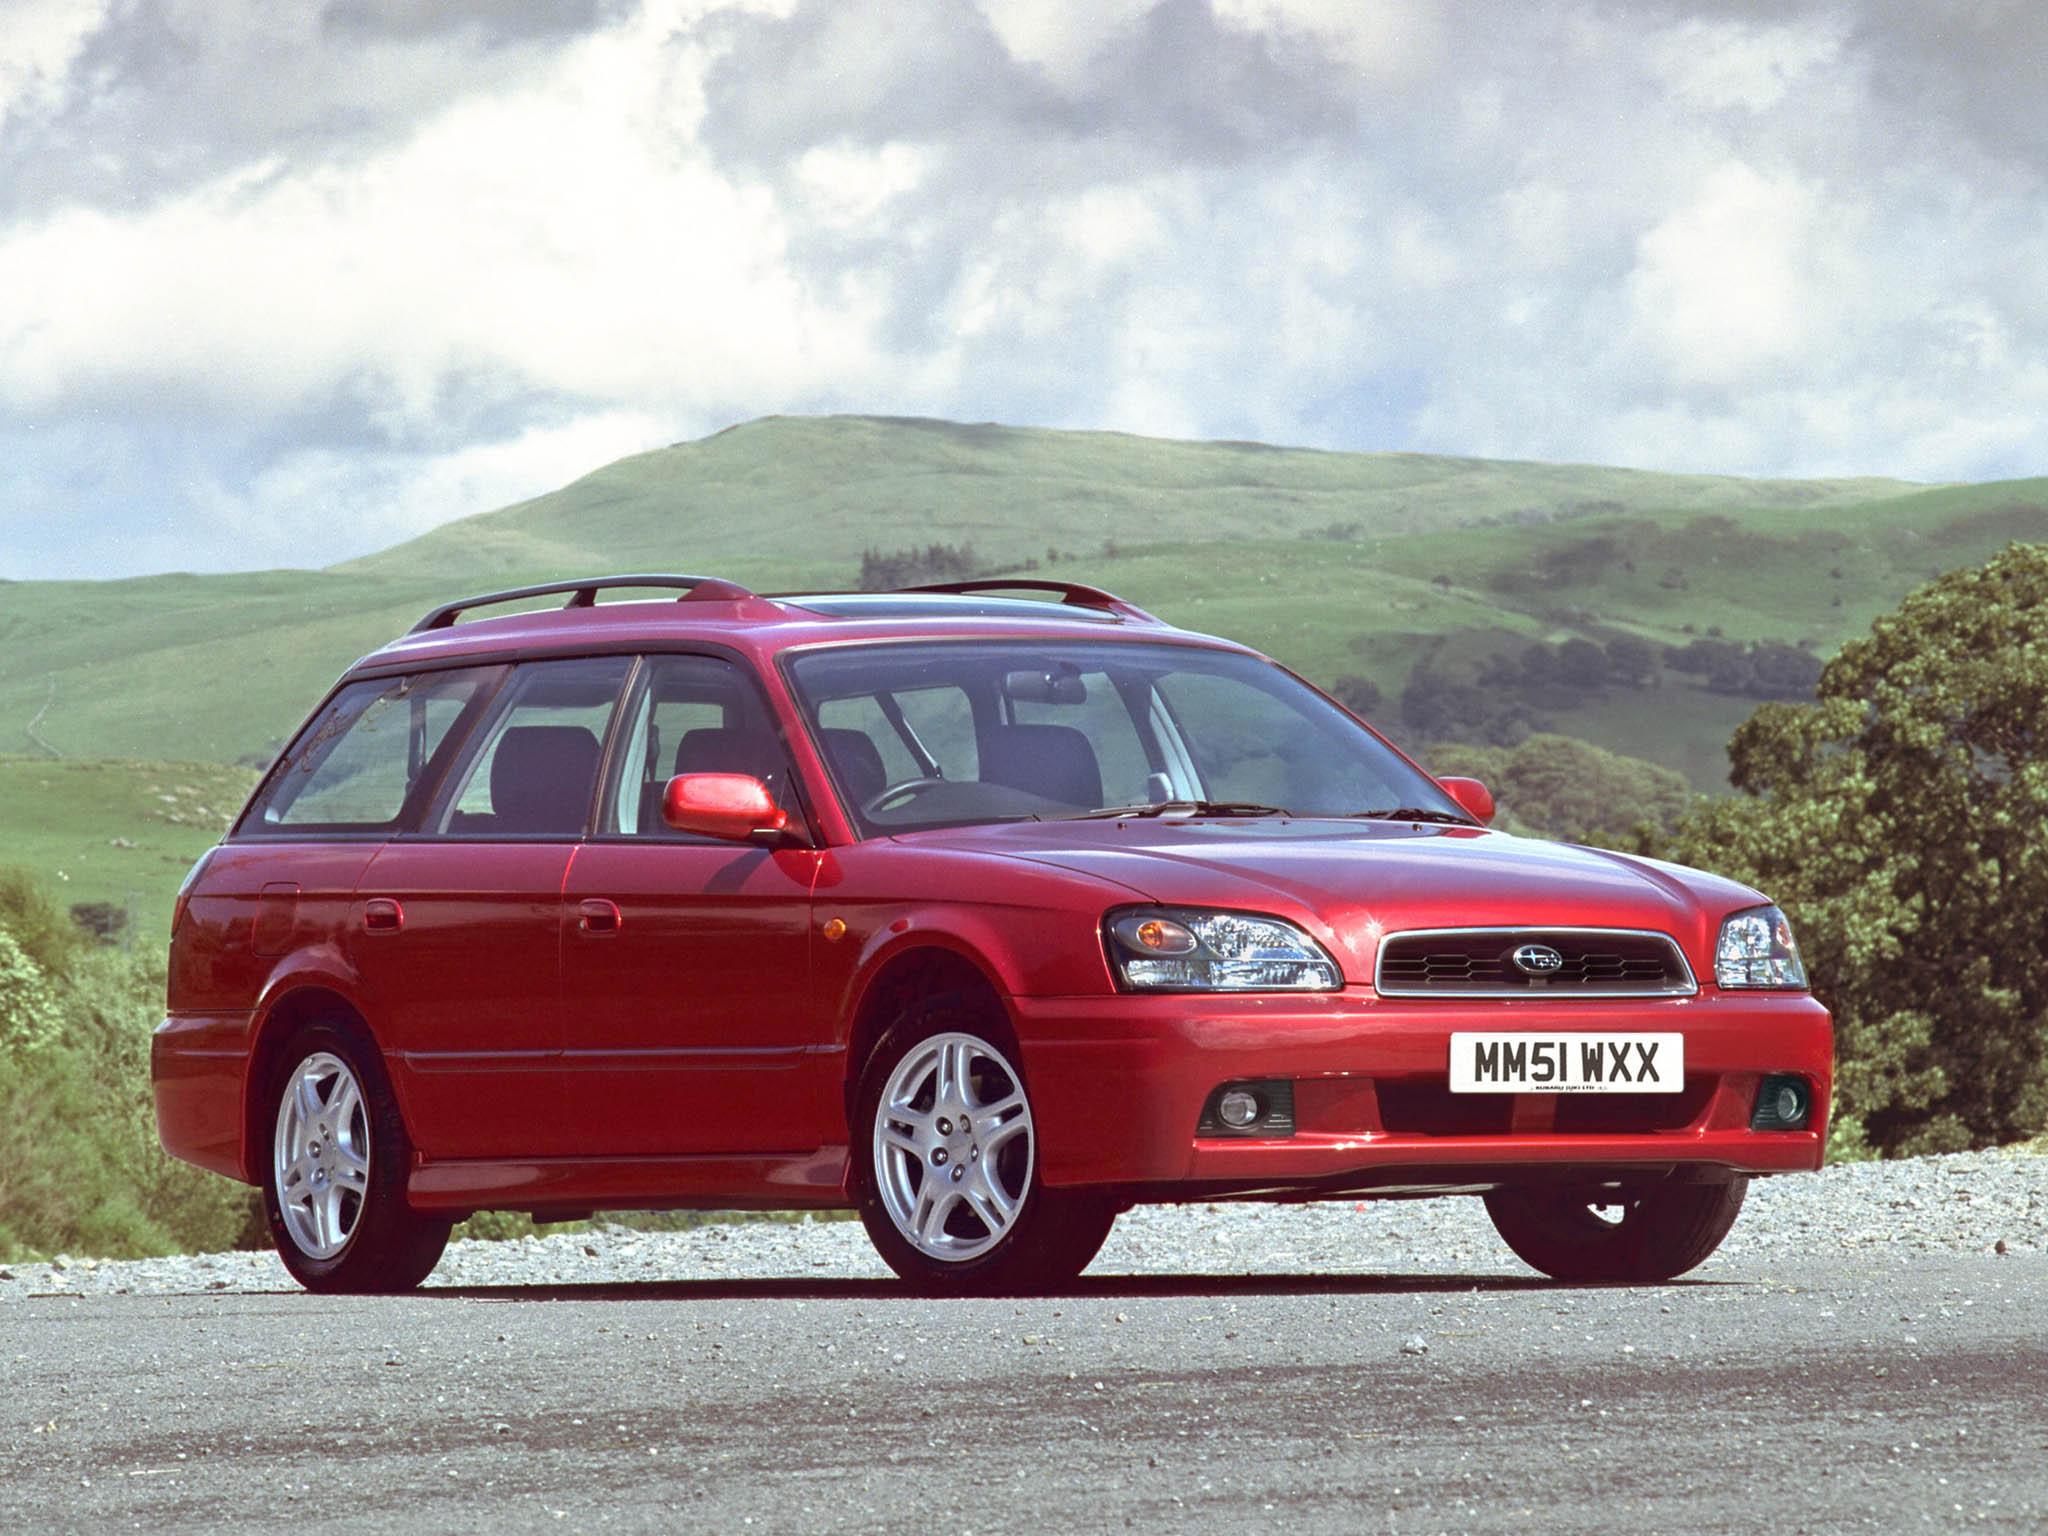 Subaru legacy 2003. 1998 Subaru Legacy Wagon. Subaru Legacy Touring Wagon. Субару Легаси 2002 универсал. Субару Легаси 1998 универсал.